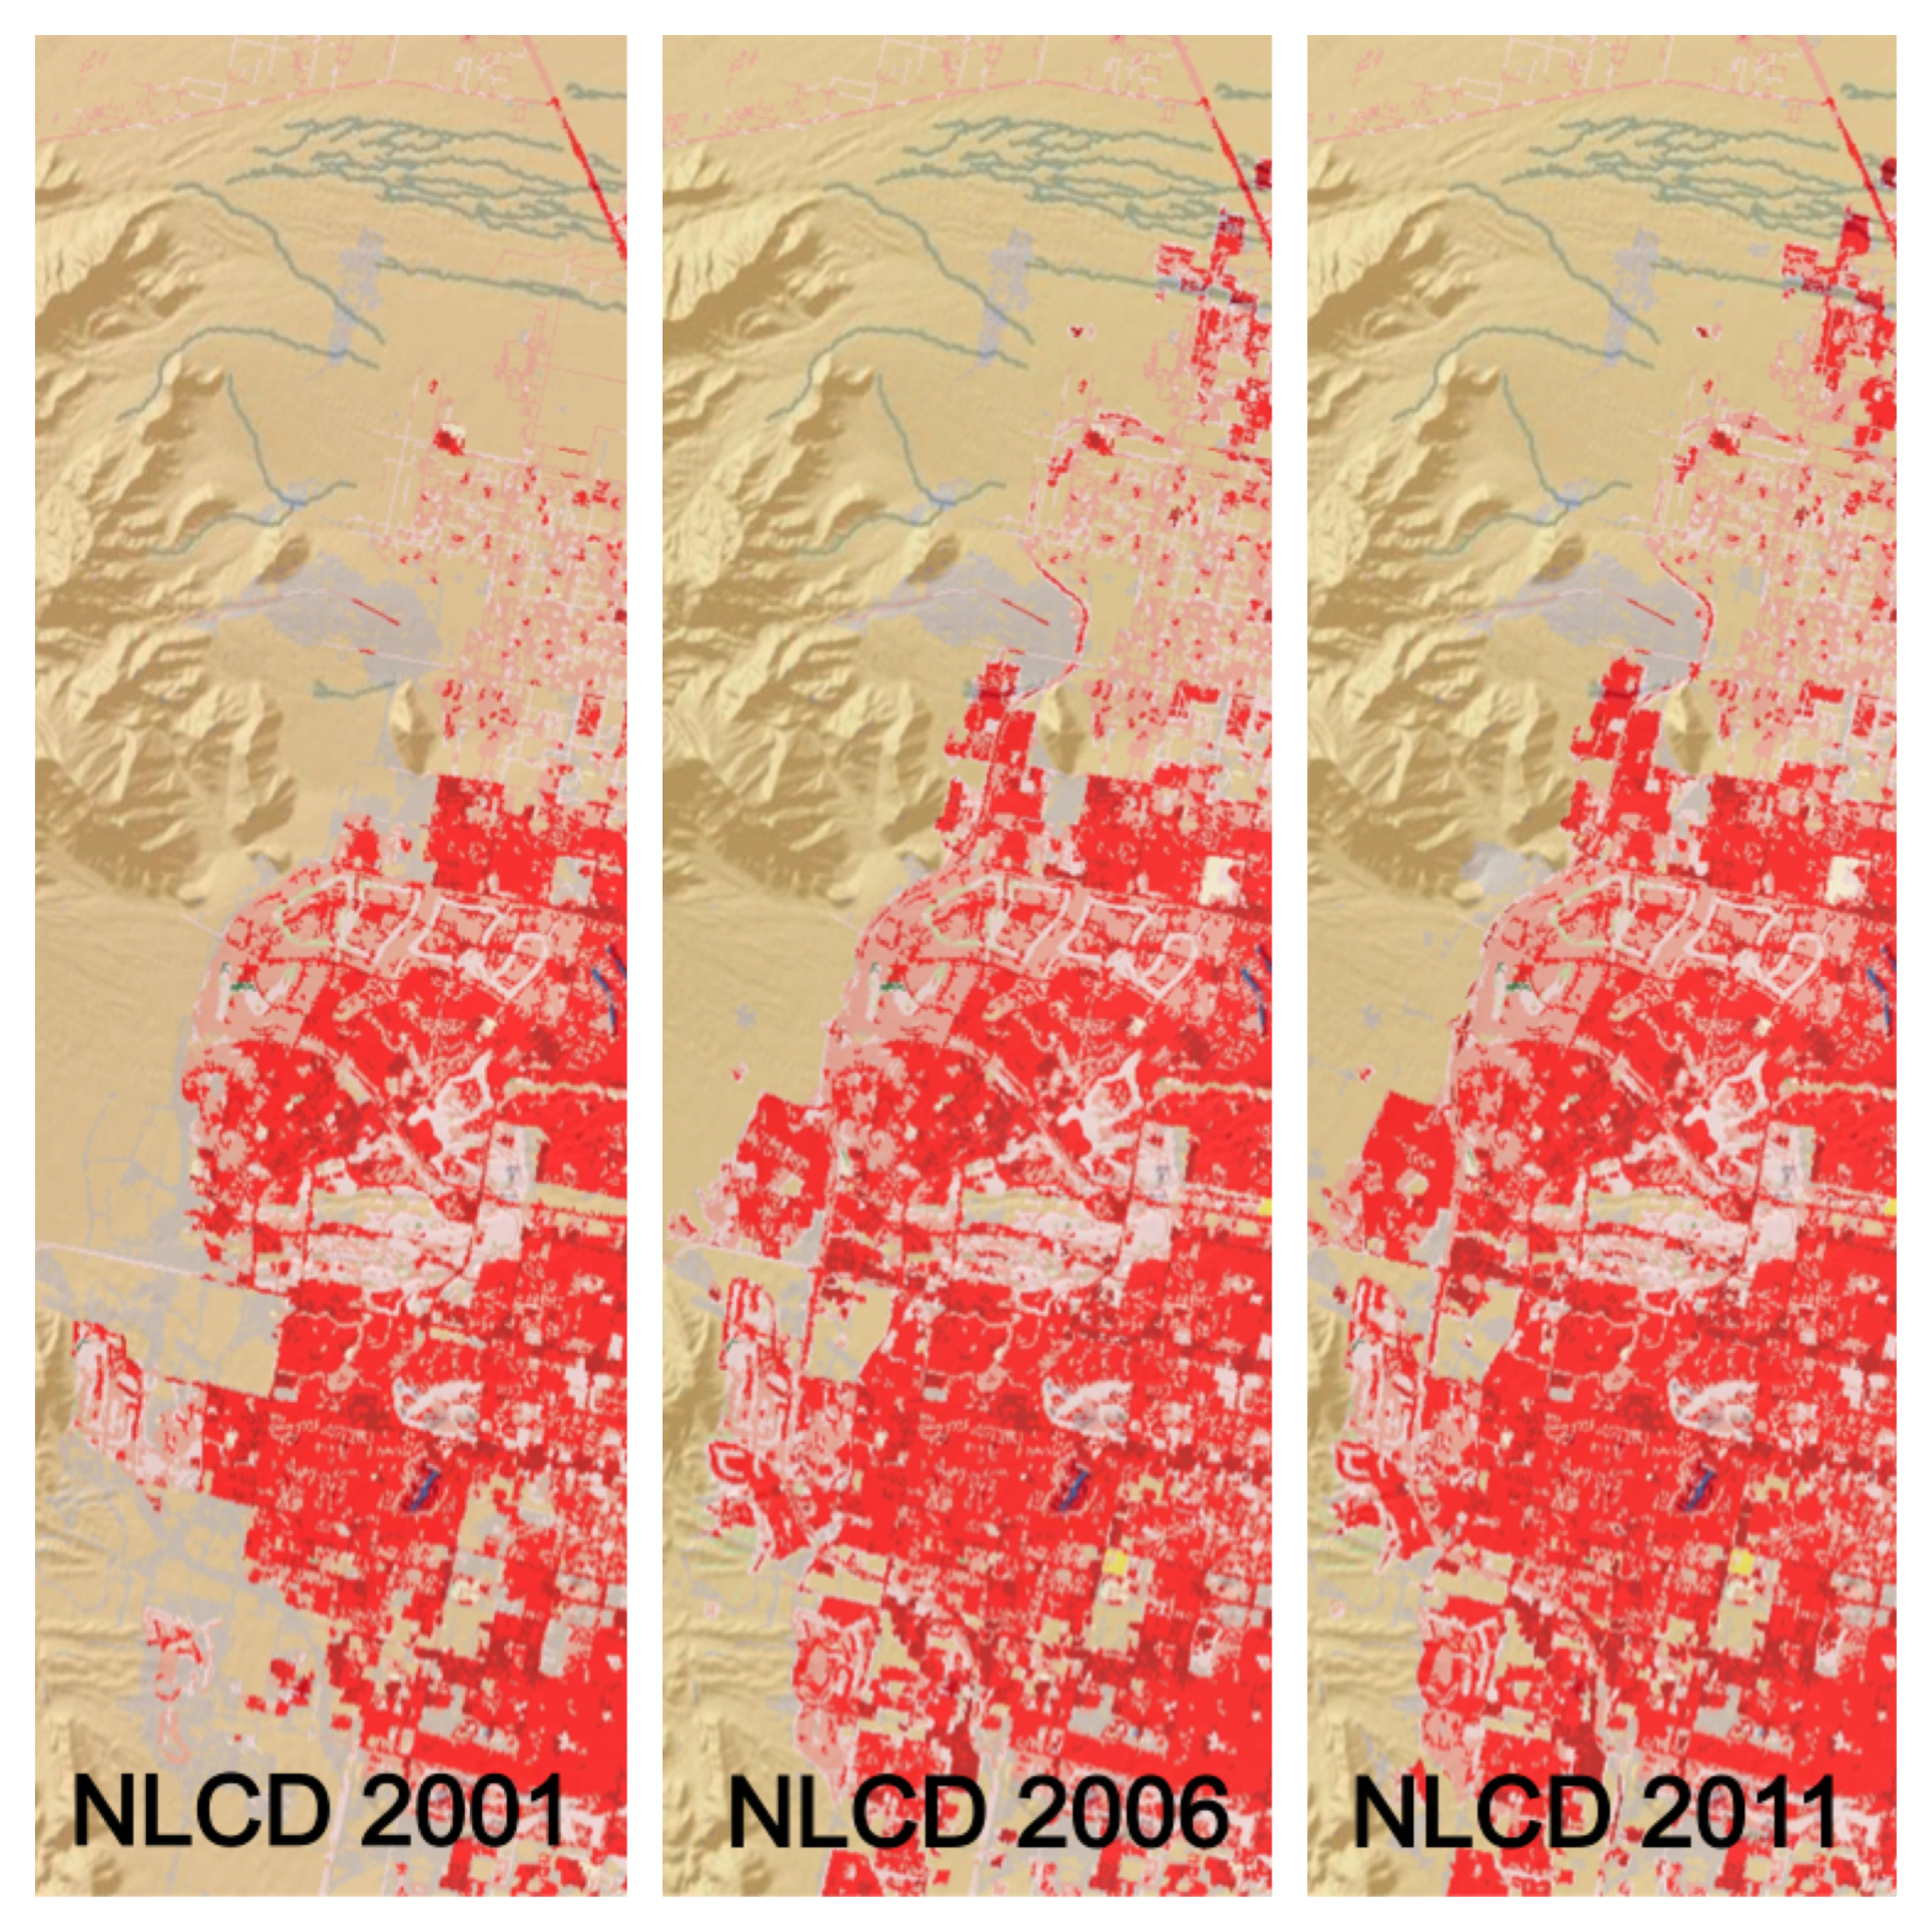 A Triptych of Urban Growth, NLCD 2001-2011